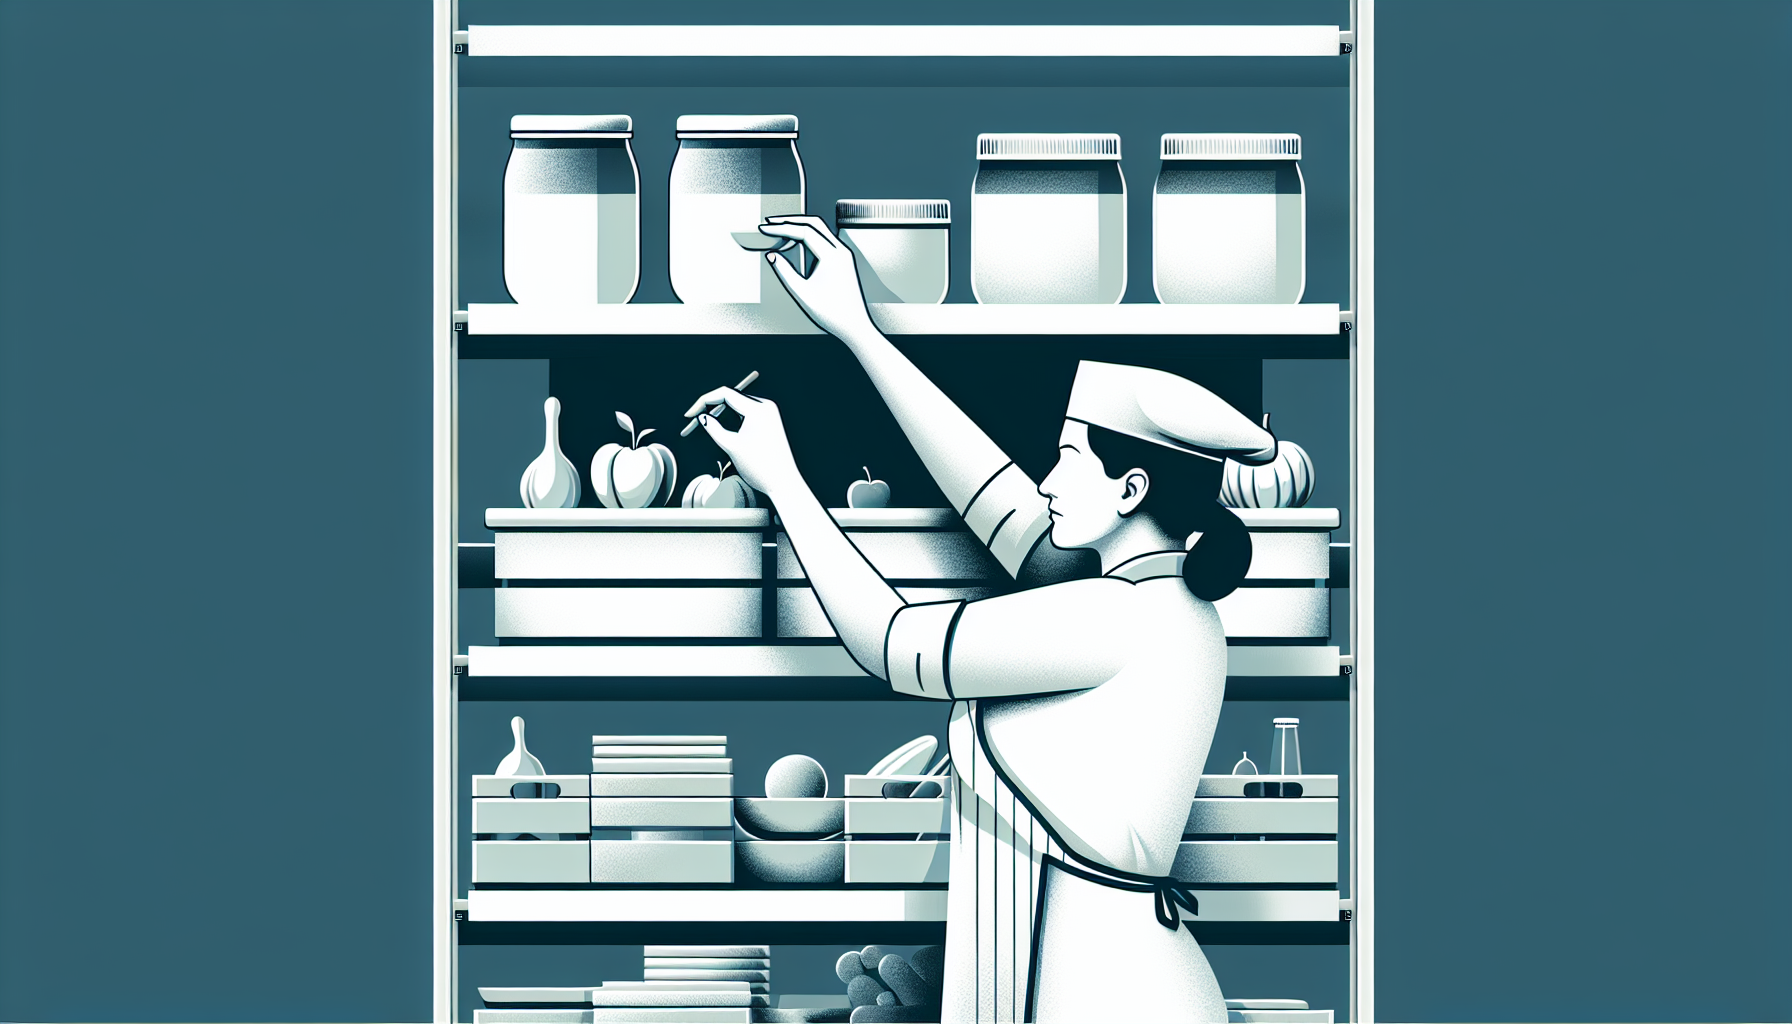 Food storage and rotation checklist